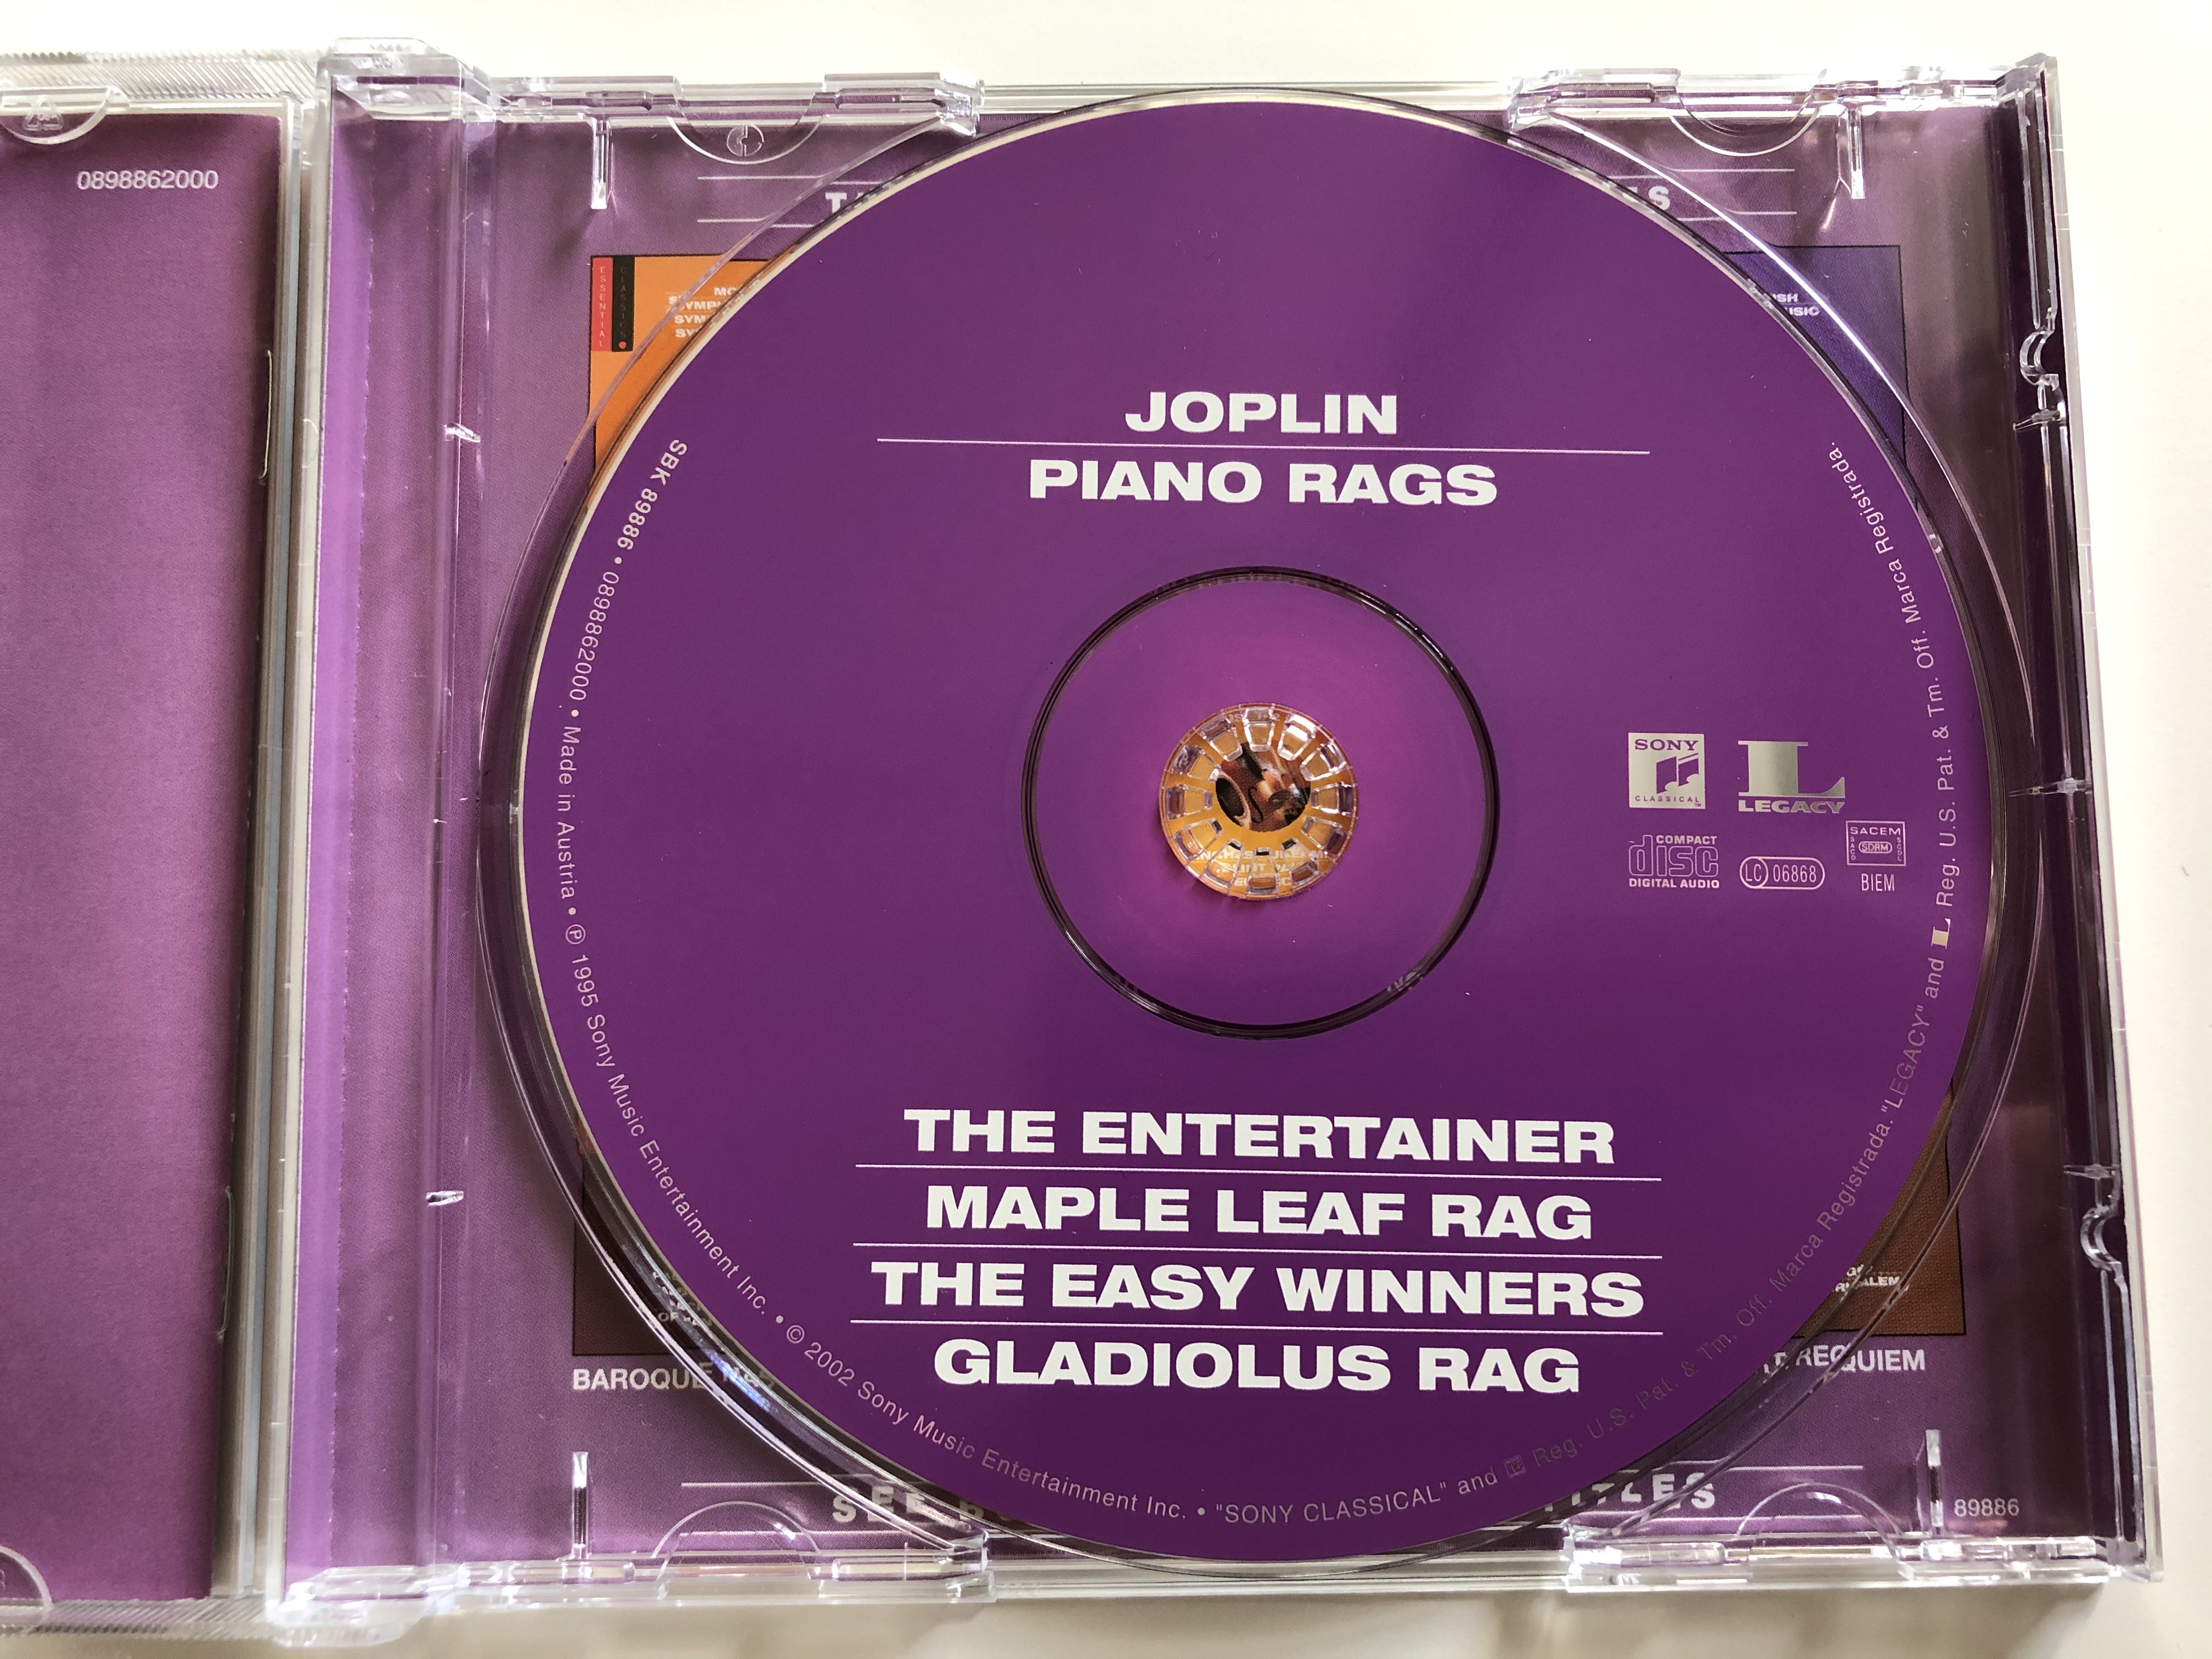 joplin-piano-rags-the-entertainer-maple-leaf-rag-the-easy-winners-gladiolus-rag-legacy-audio-cd-2002-sbk-89886-5-.jpg